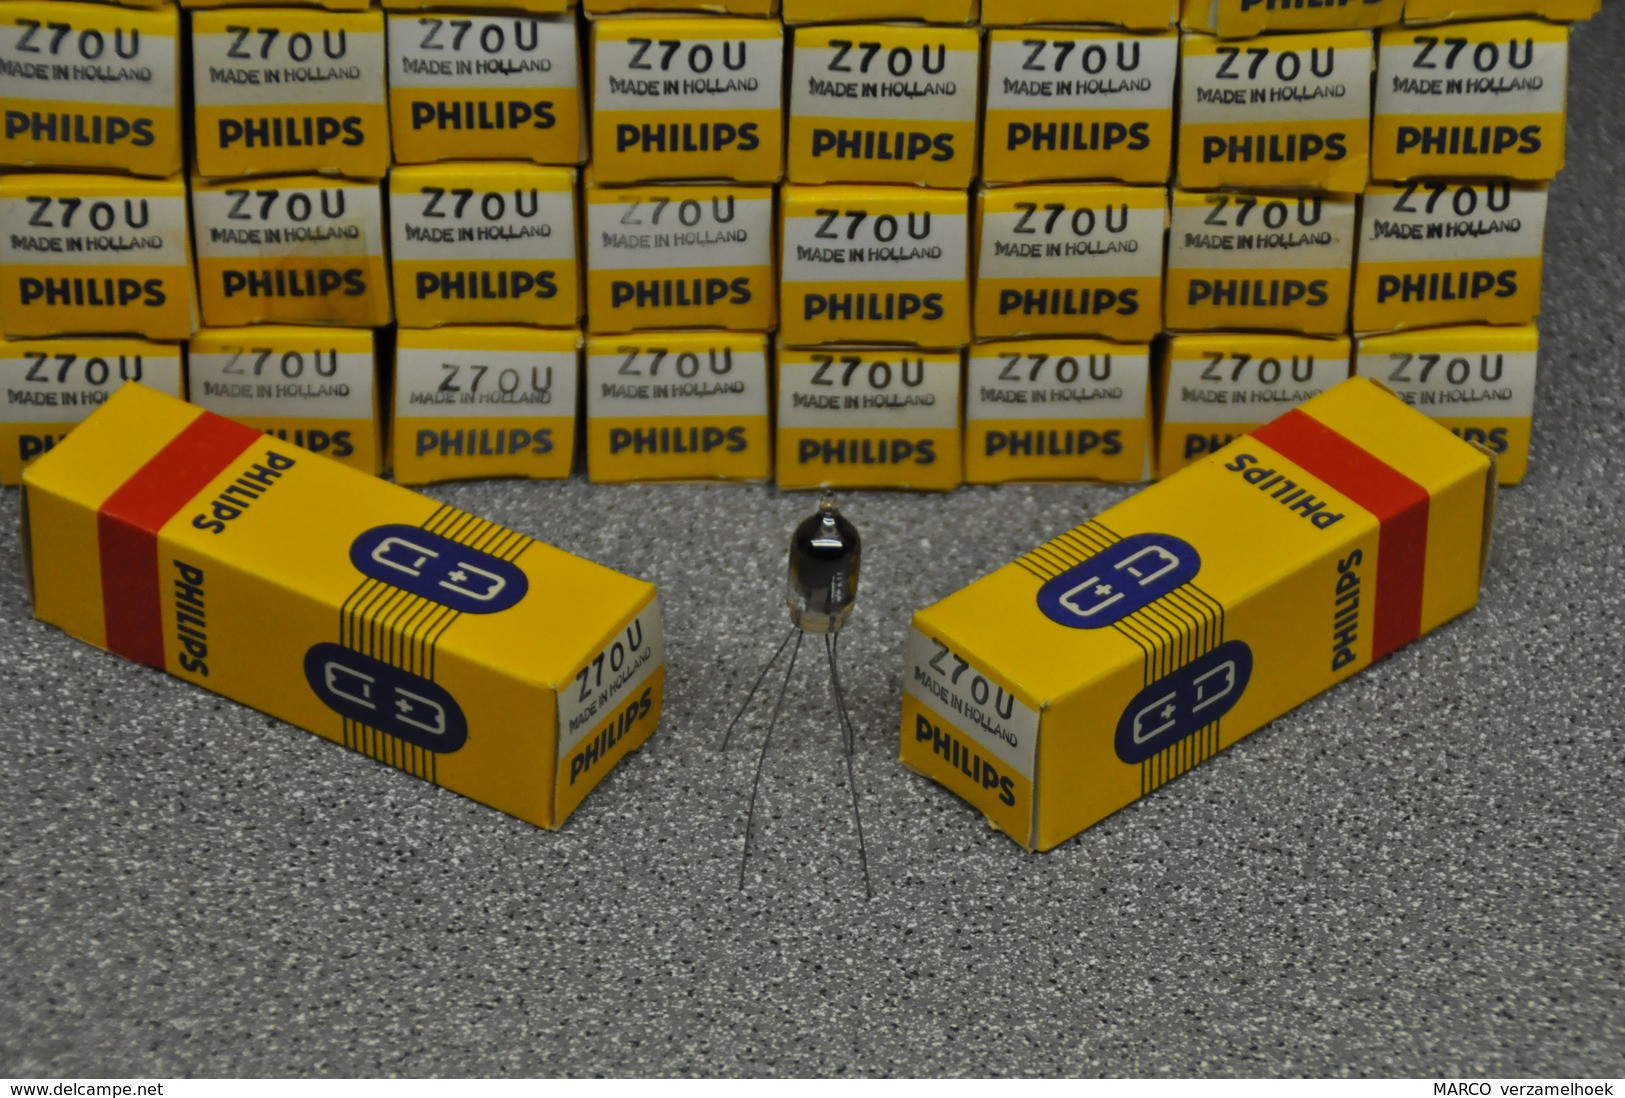 Philips Buis-röhre-tube Z70U - (7710 - GR43) Thyratron Tube New (jukebox) Neonbuisje Glimmröhre - Elektronenbuis